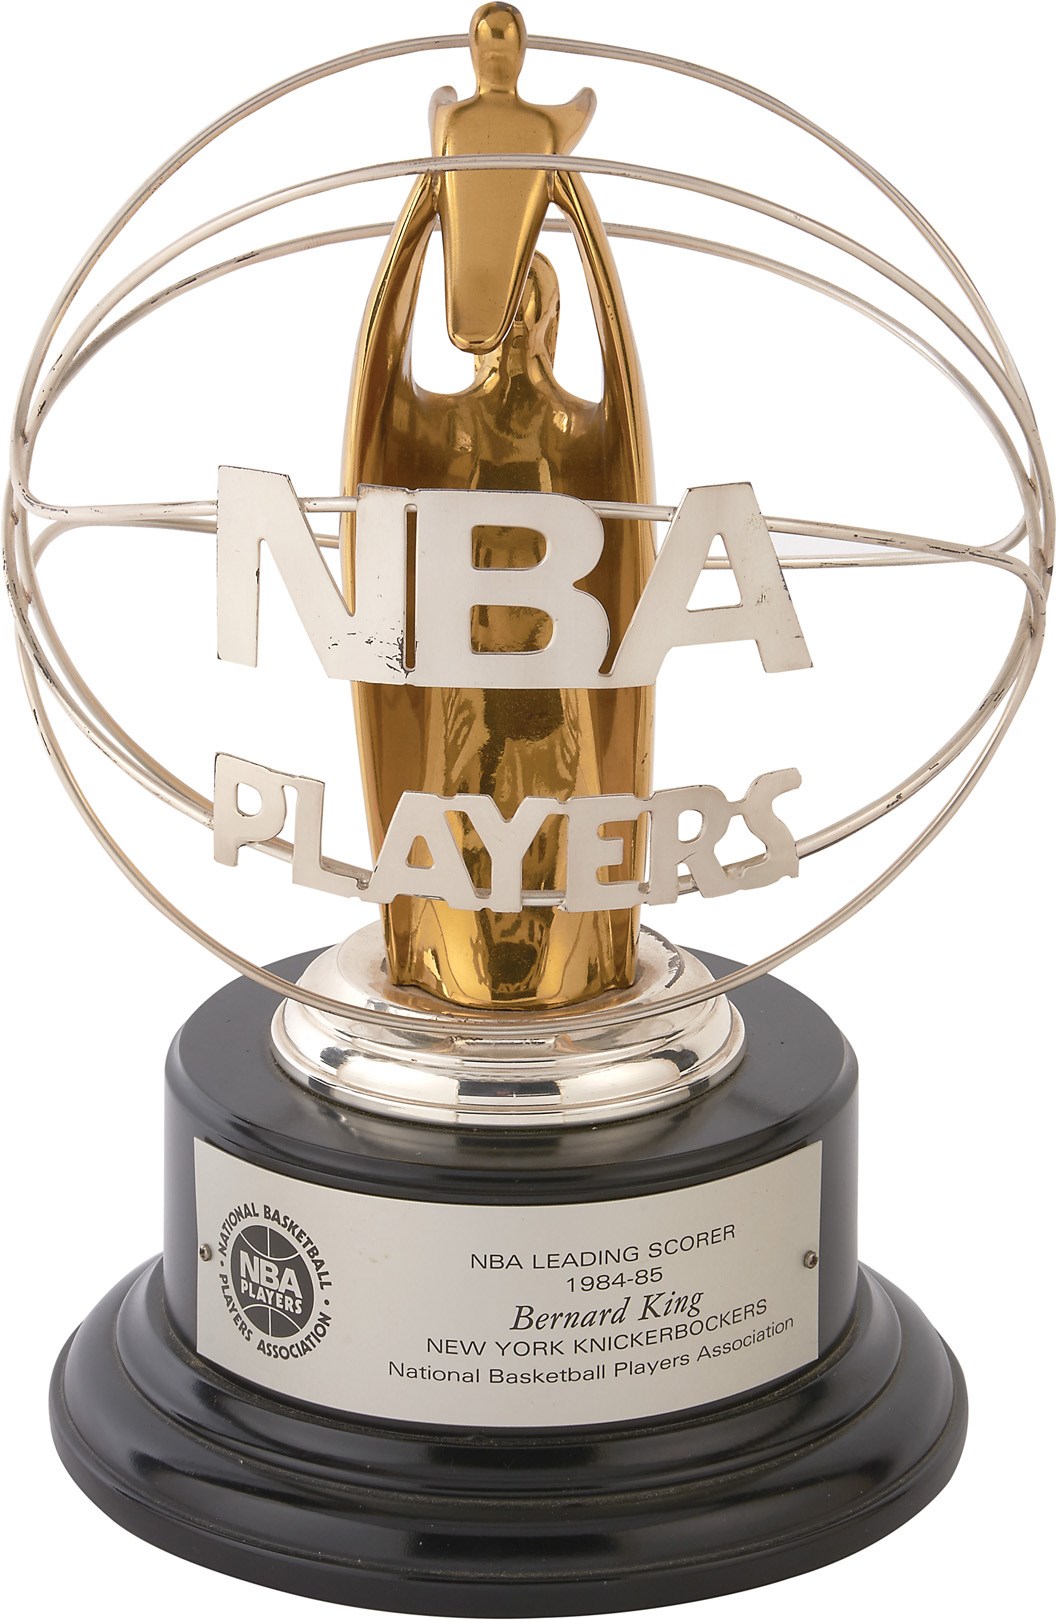 Basketball - 1984-85 Bernard King NBA Leading Scorer Award